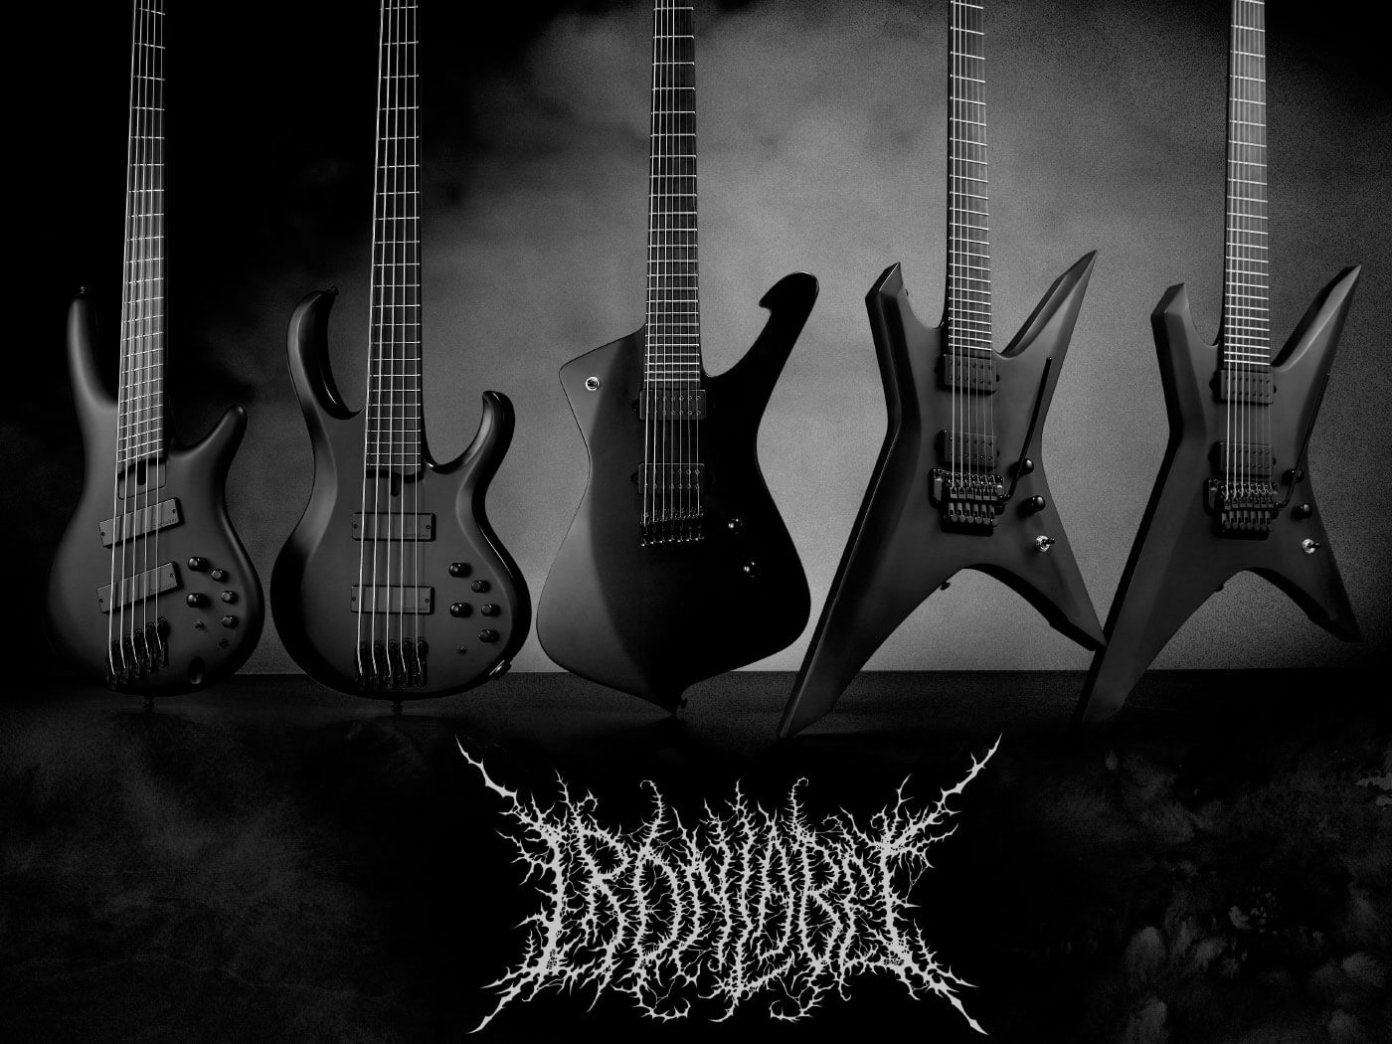 deathmetal guitars